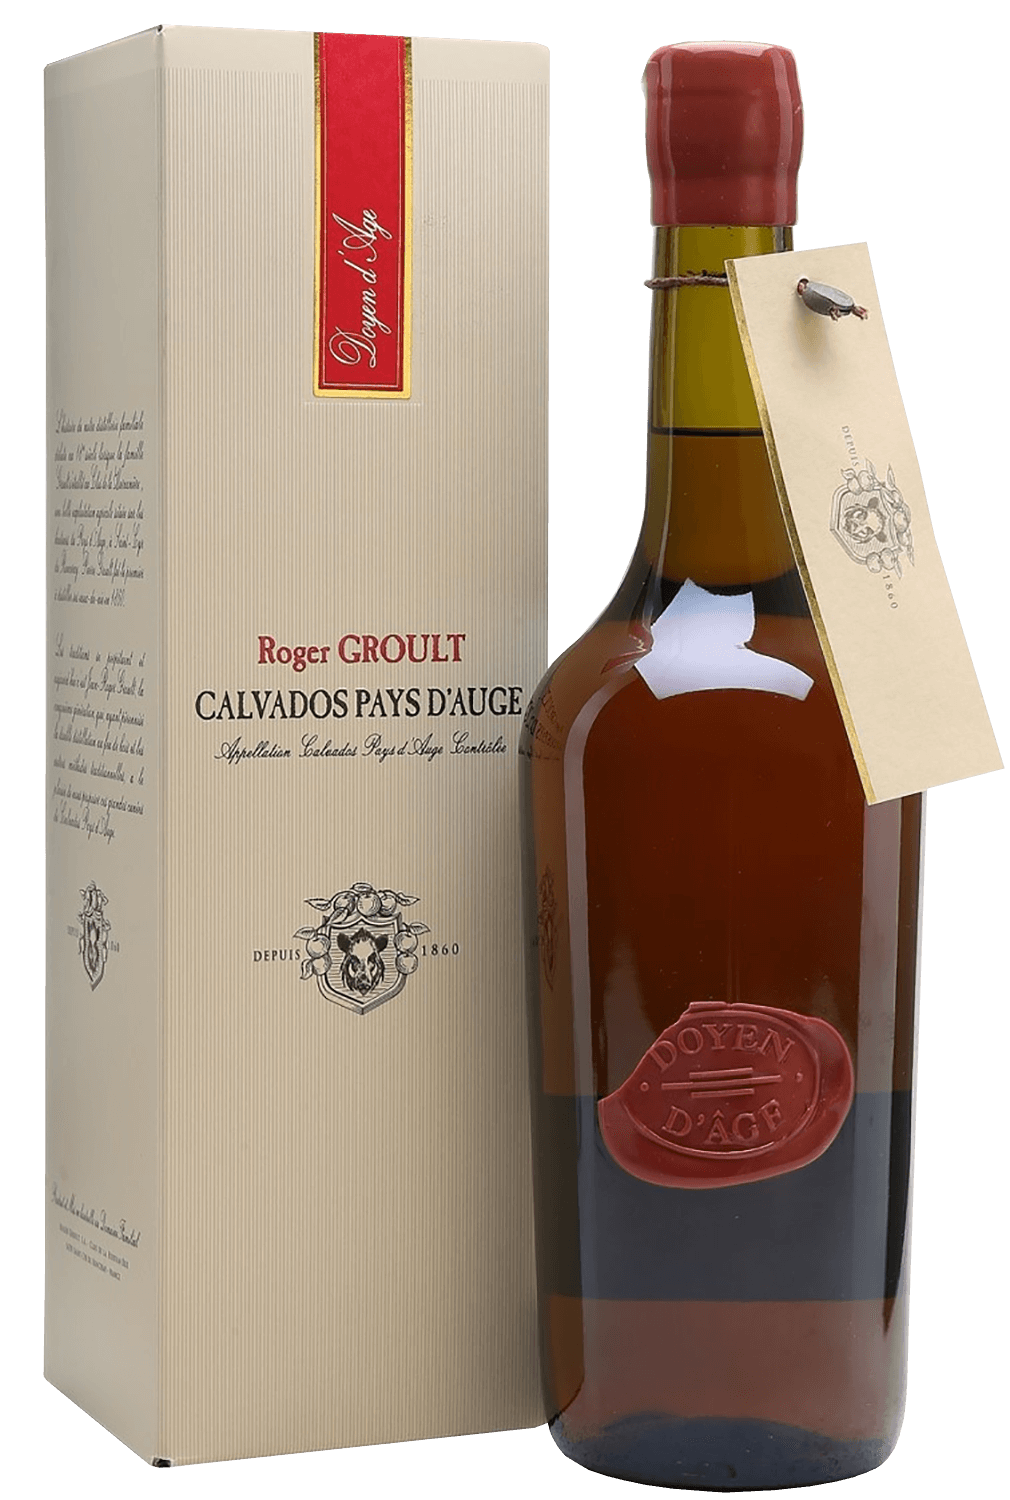 Doyen d'Or Calvados Pays D'Auge AOC Roger Groult (gift box) calvados pays d auge aoc 3 ans roger groult gift box